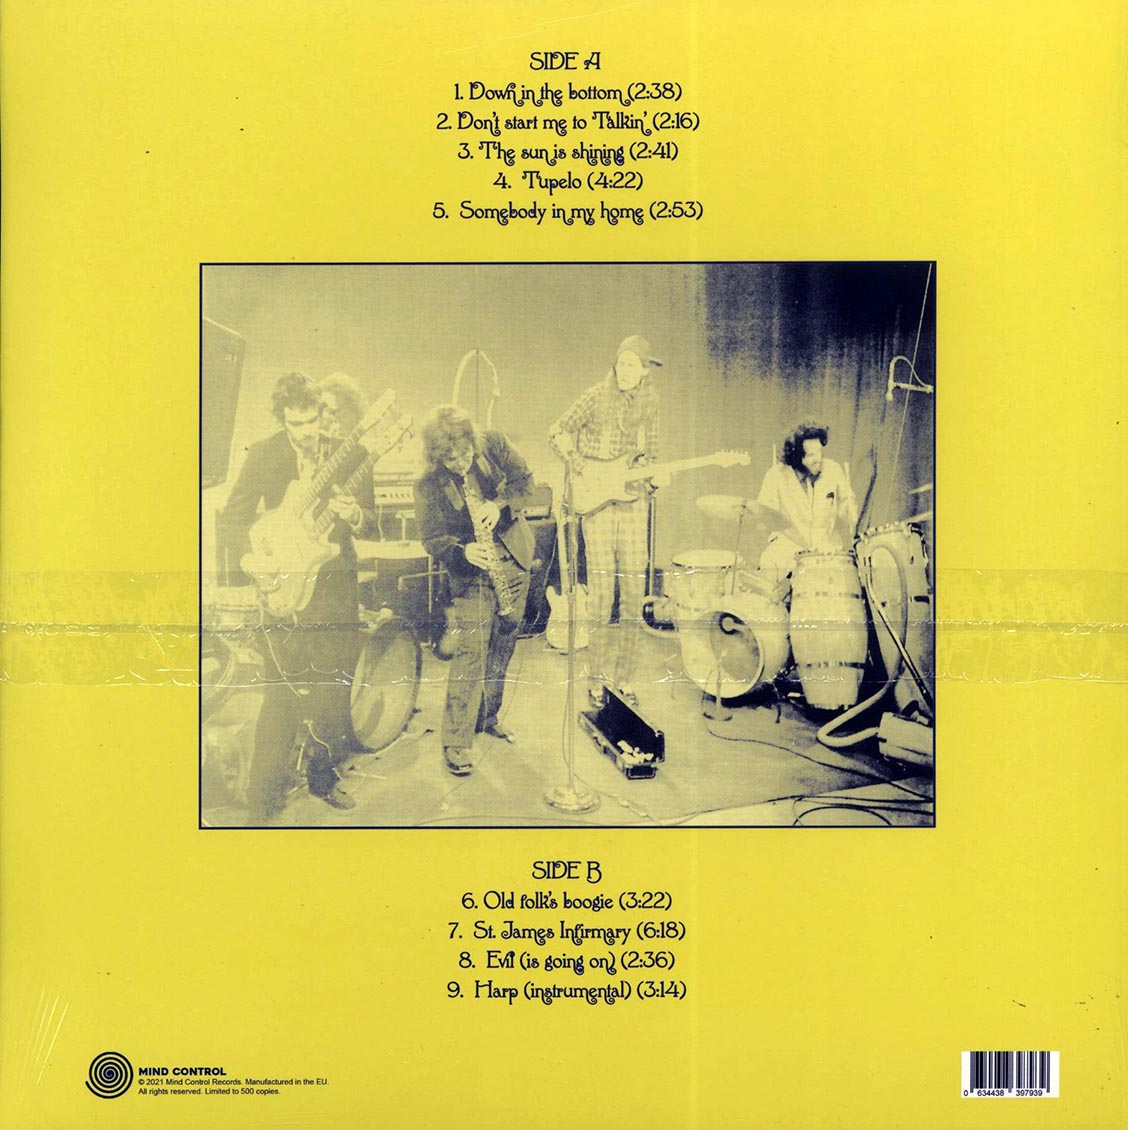 Captain Beefheart - Live At The Avalon Ballroom 1966 (ltd. 500 copies made) - Vinyl LP, LP